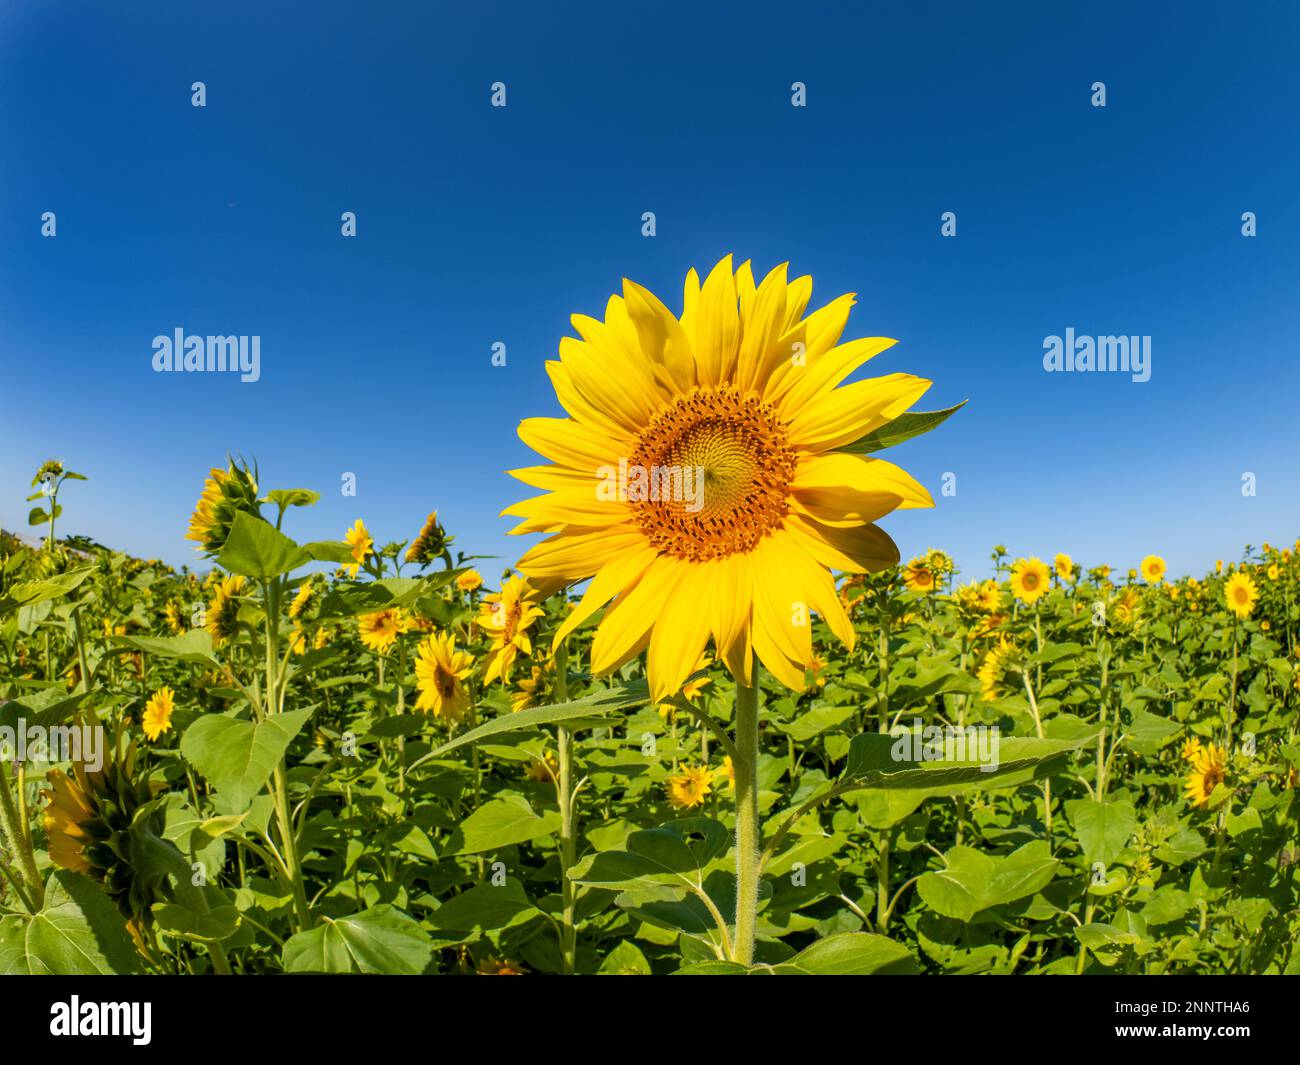 Sunflower in field under blue sky Stock Photo